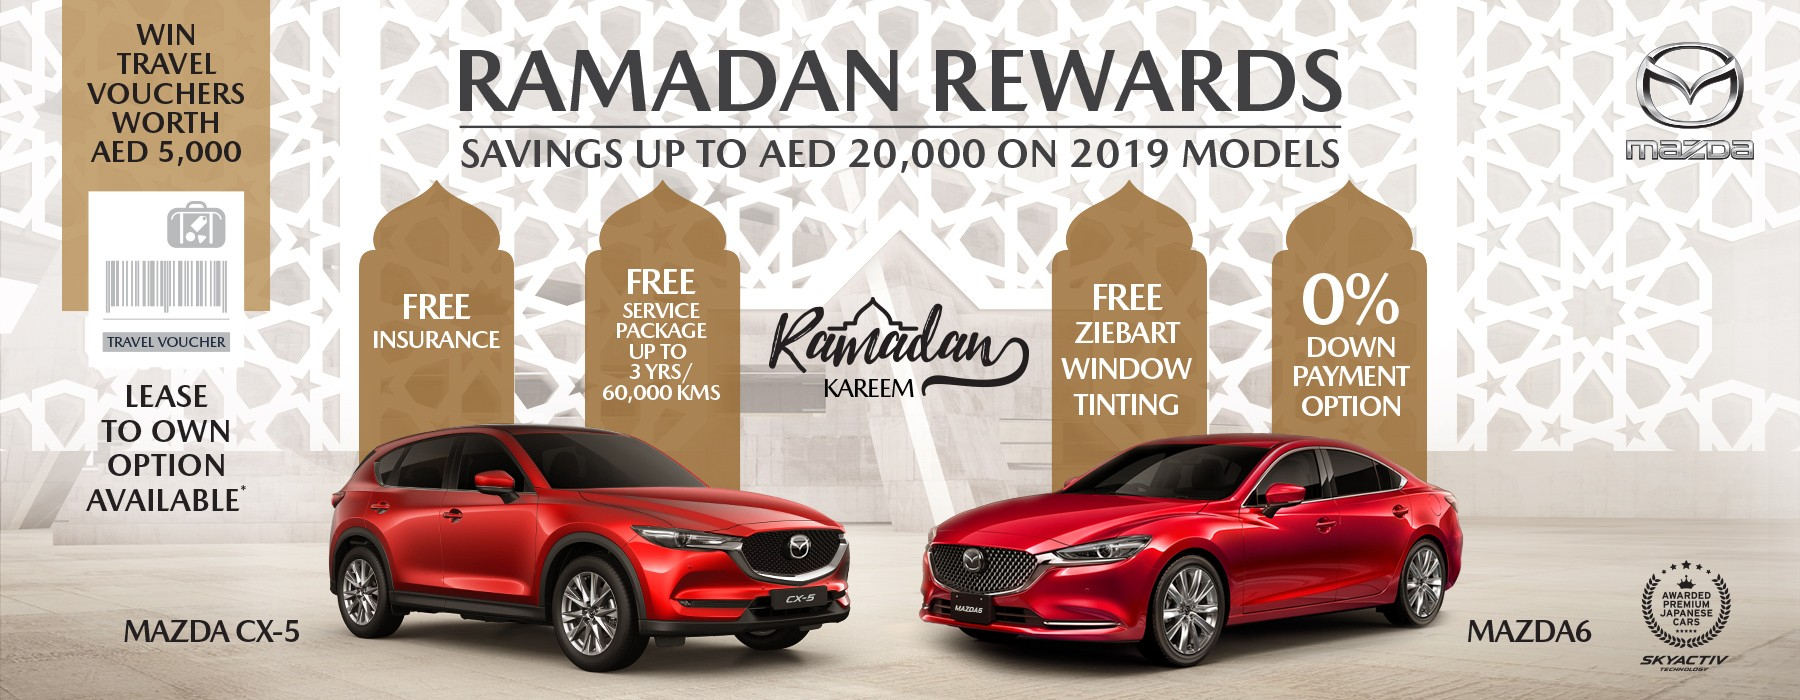 Ramadan Rewards for size 1800 X 700